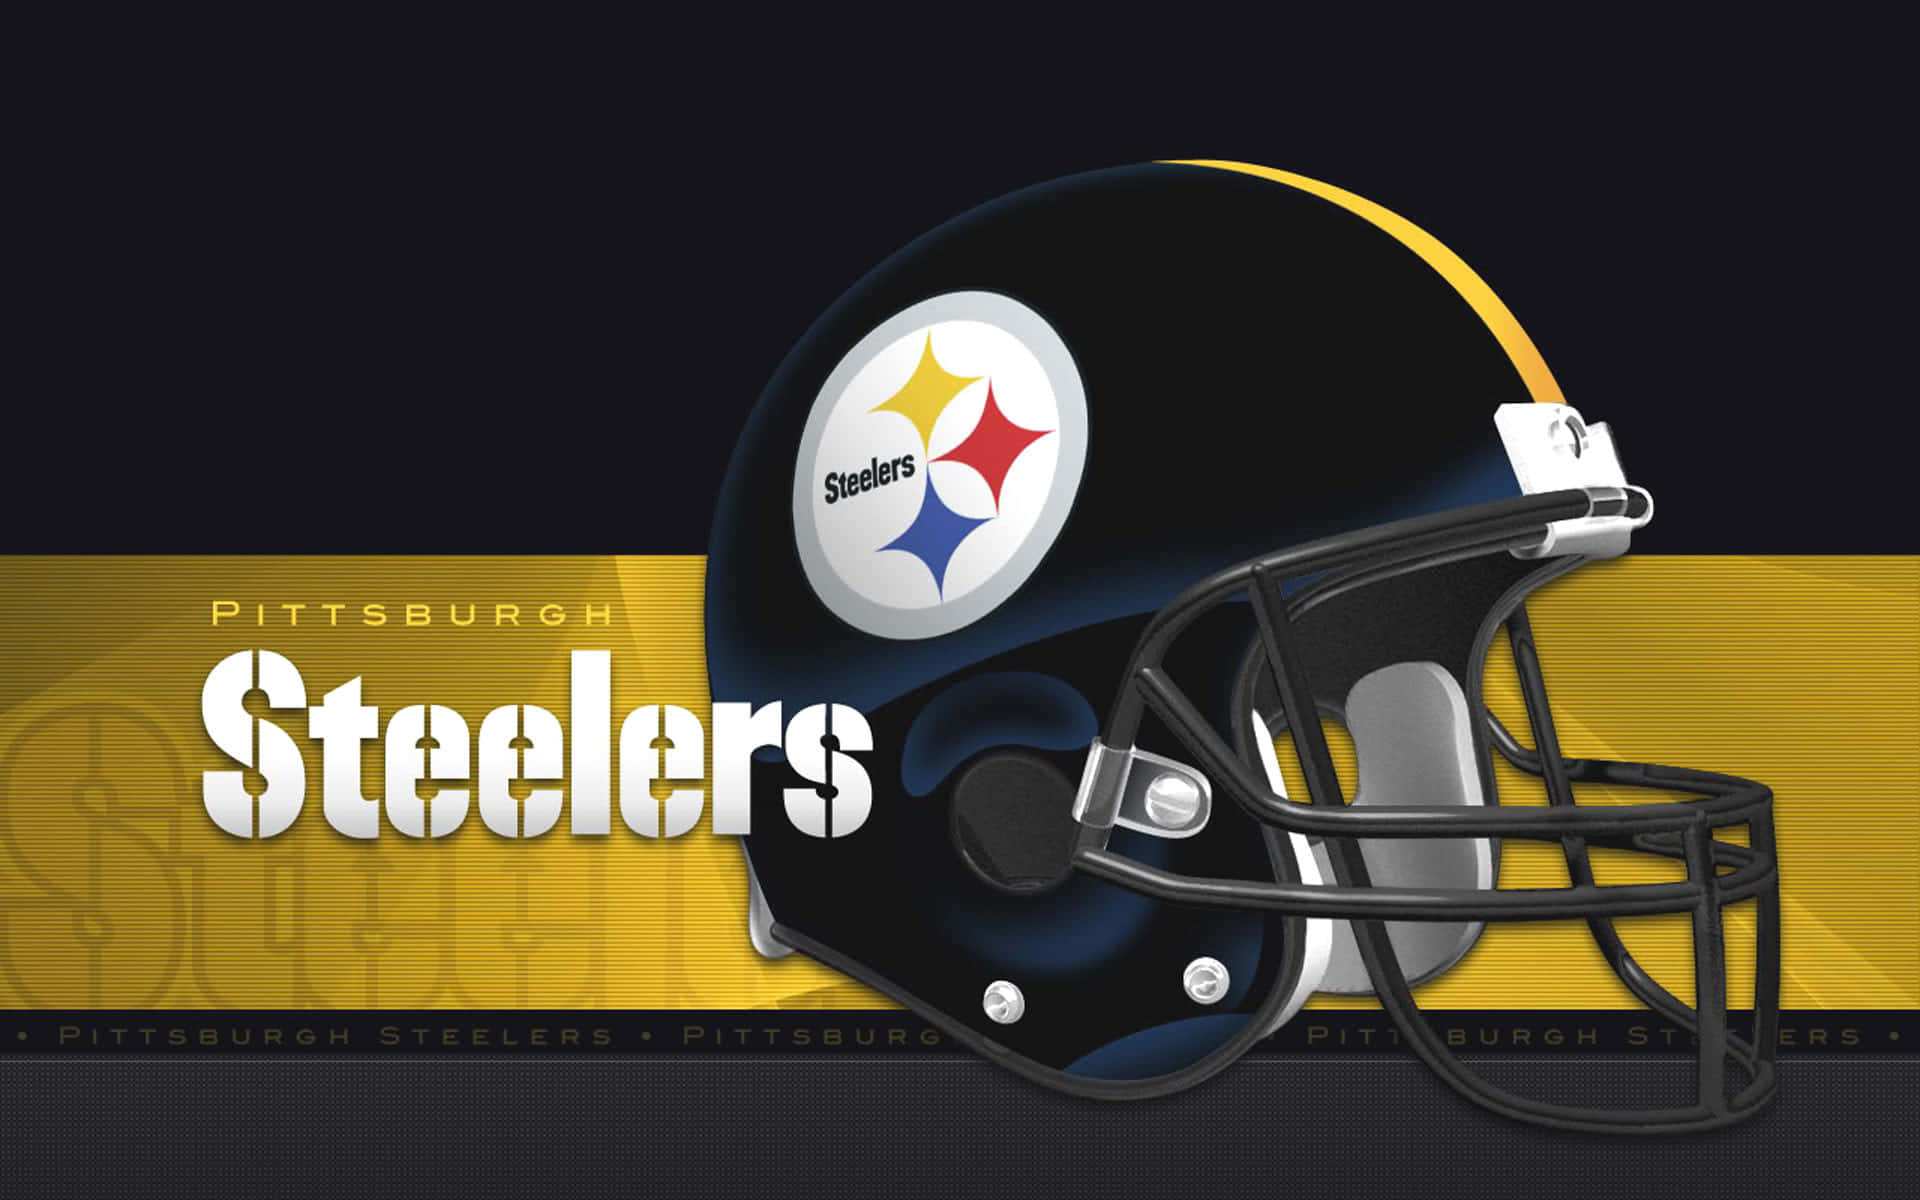 Steelersbaggrundsbillede.